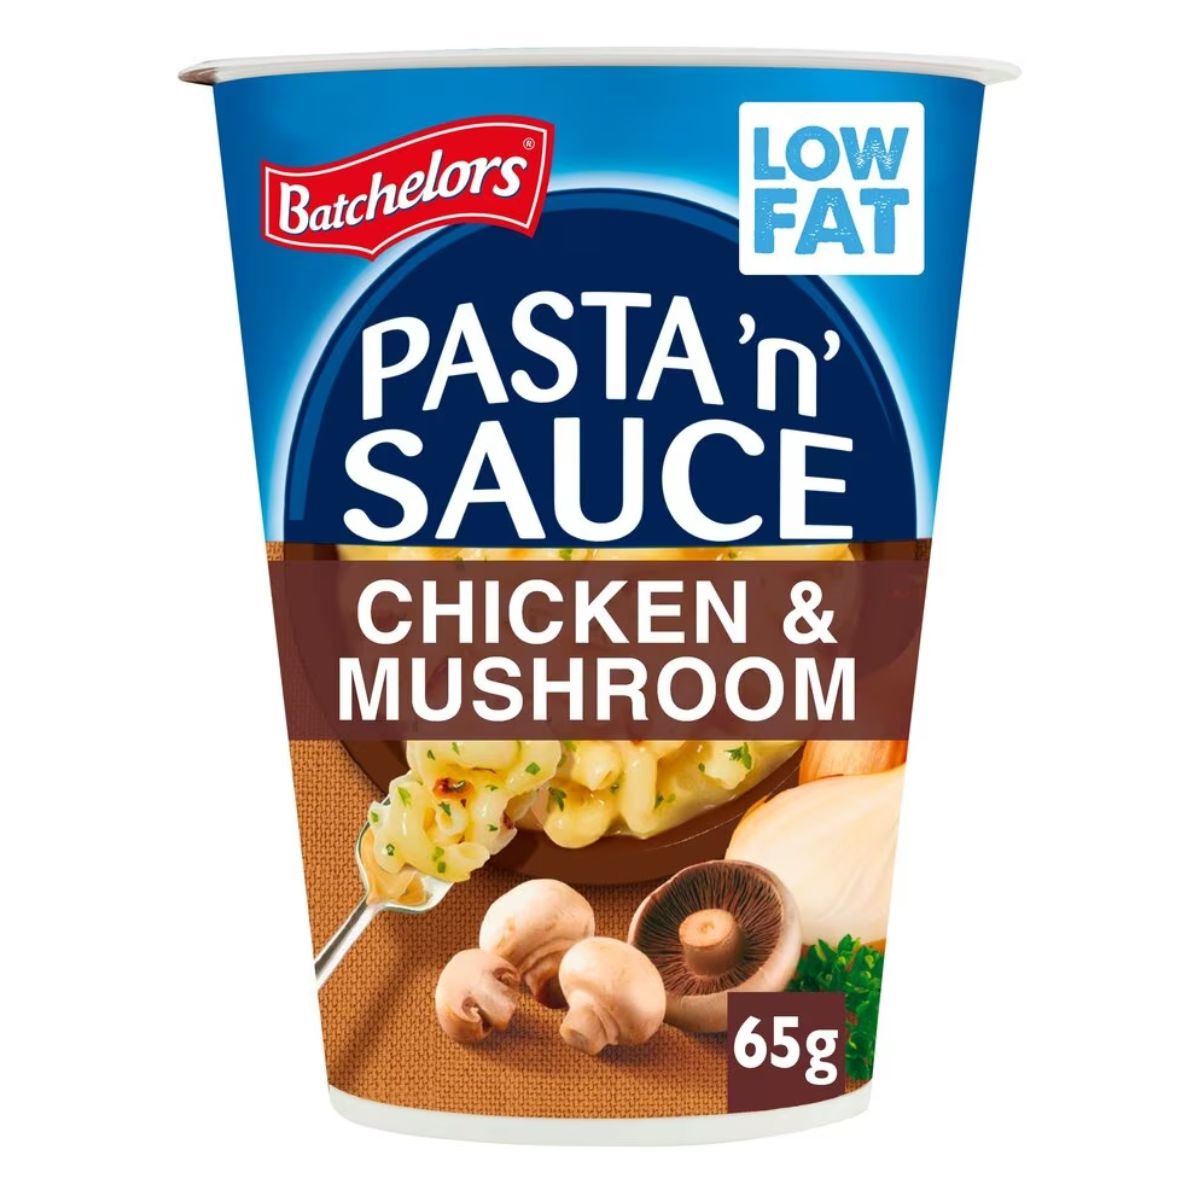 A cup of Batchelors - Pasta & Sauce Chicken & Mushroom - 65g.